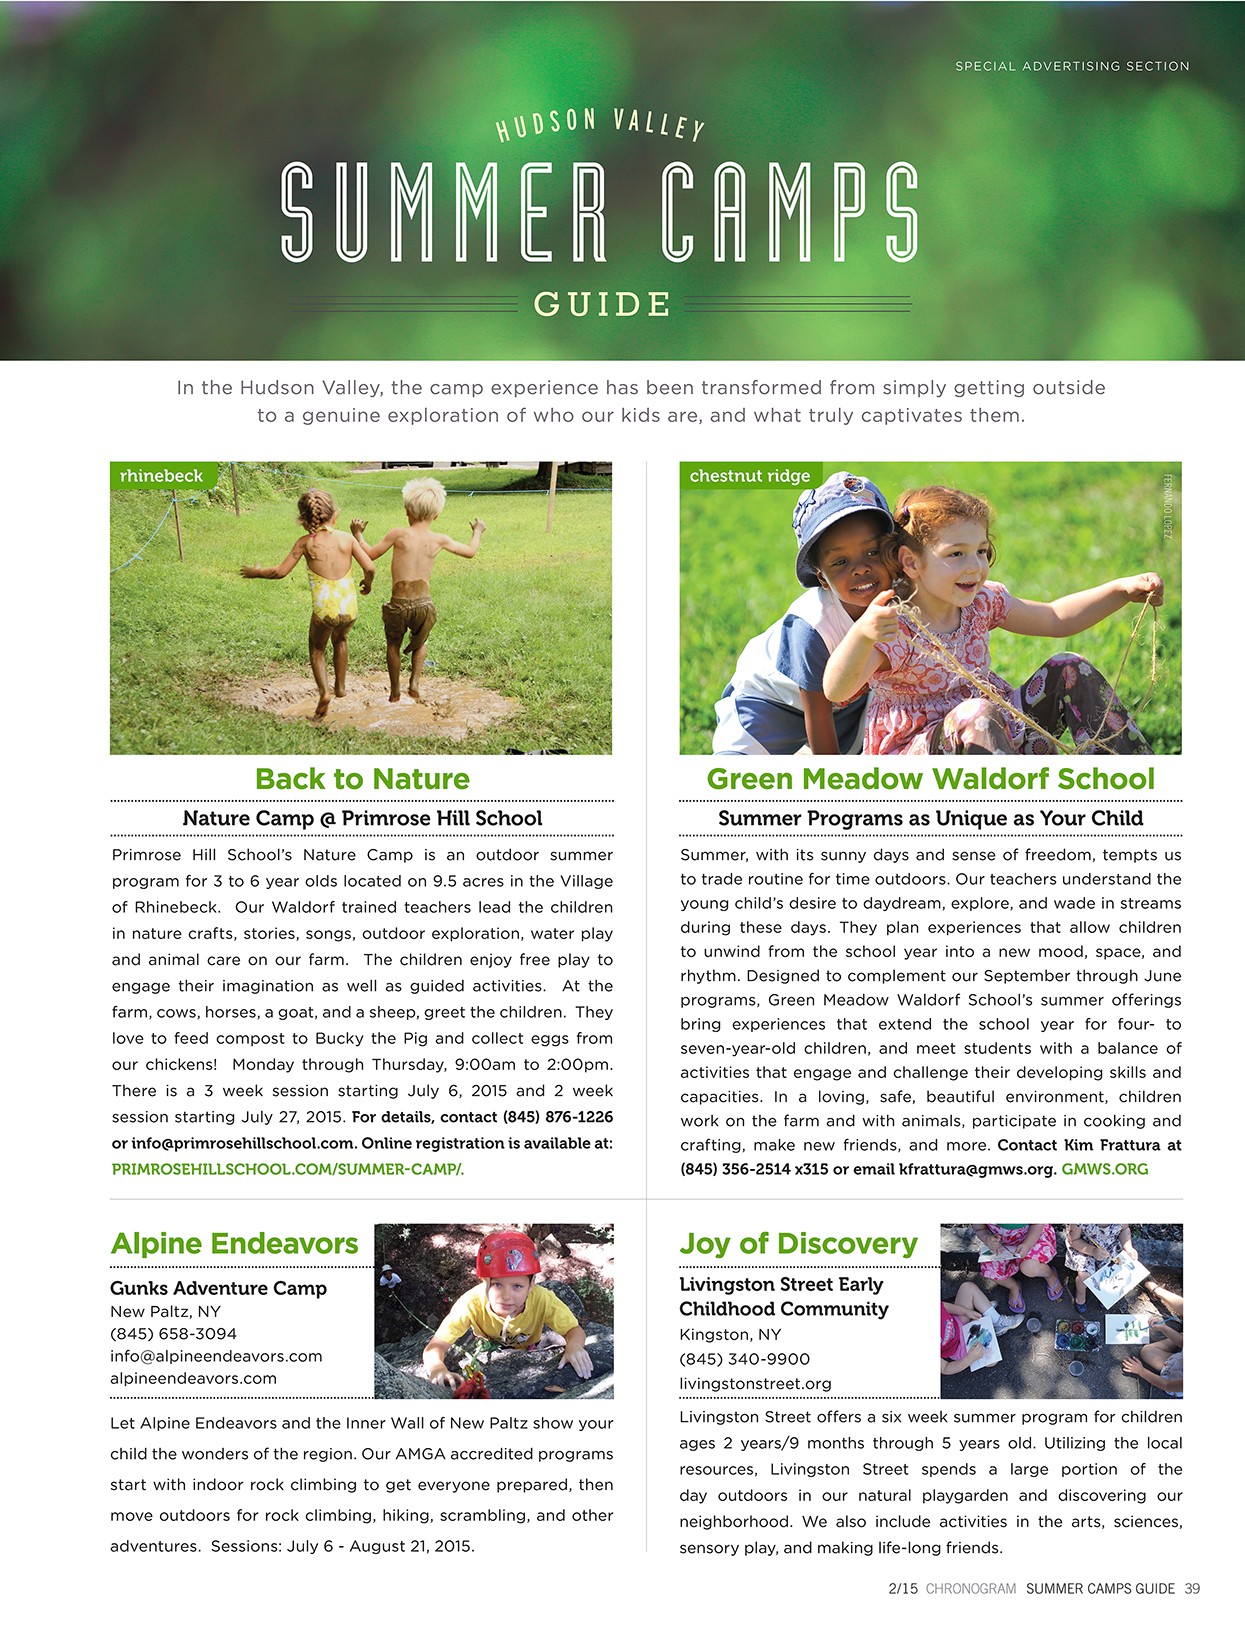 Hudson Valley Summer Camp Guide 2015